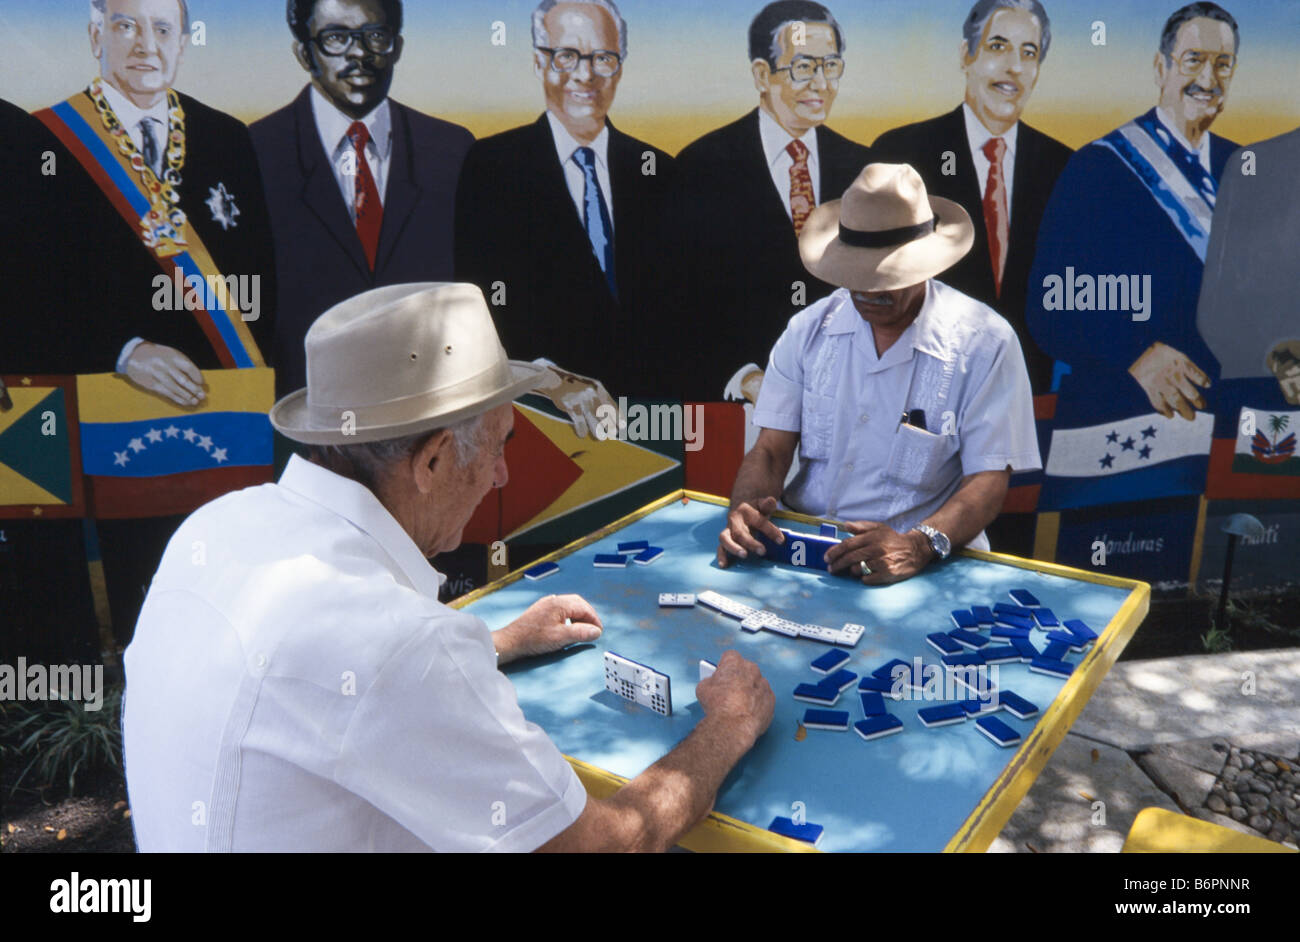 Latin men playing dominos at Domino Park, Little Havana, Miami, Florida Stock Photo